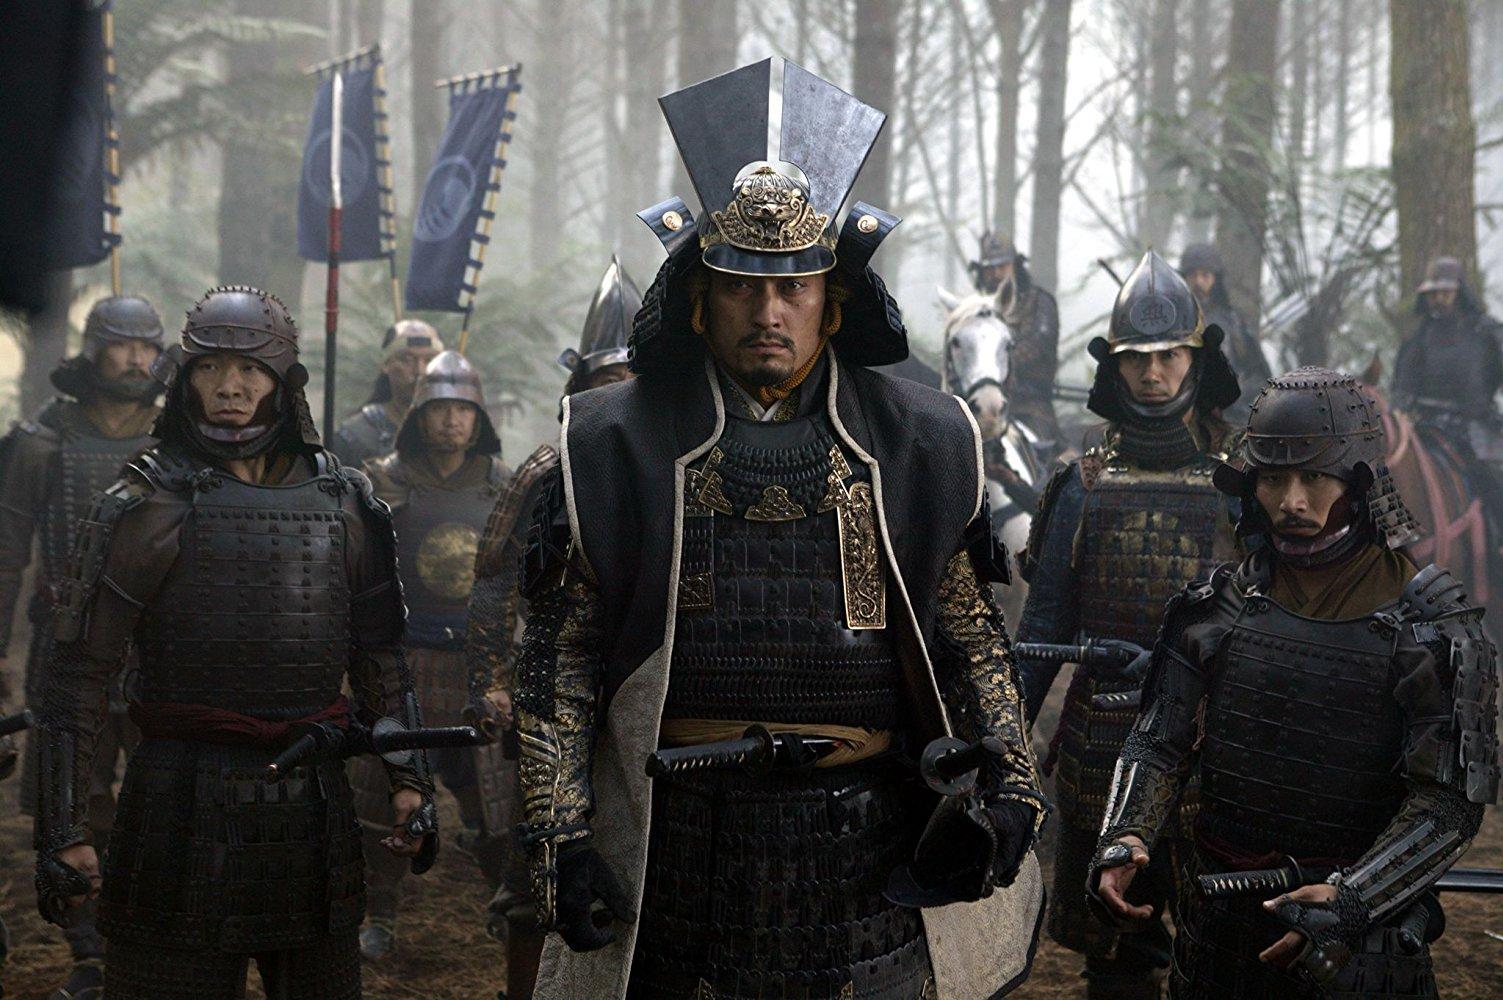 Image gallery for The Last Samurai - FilmAffinity